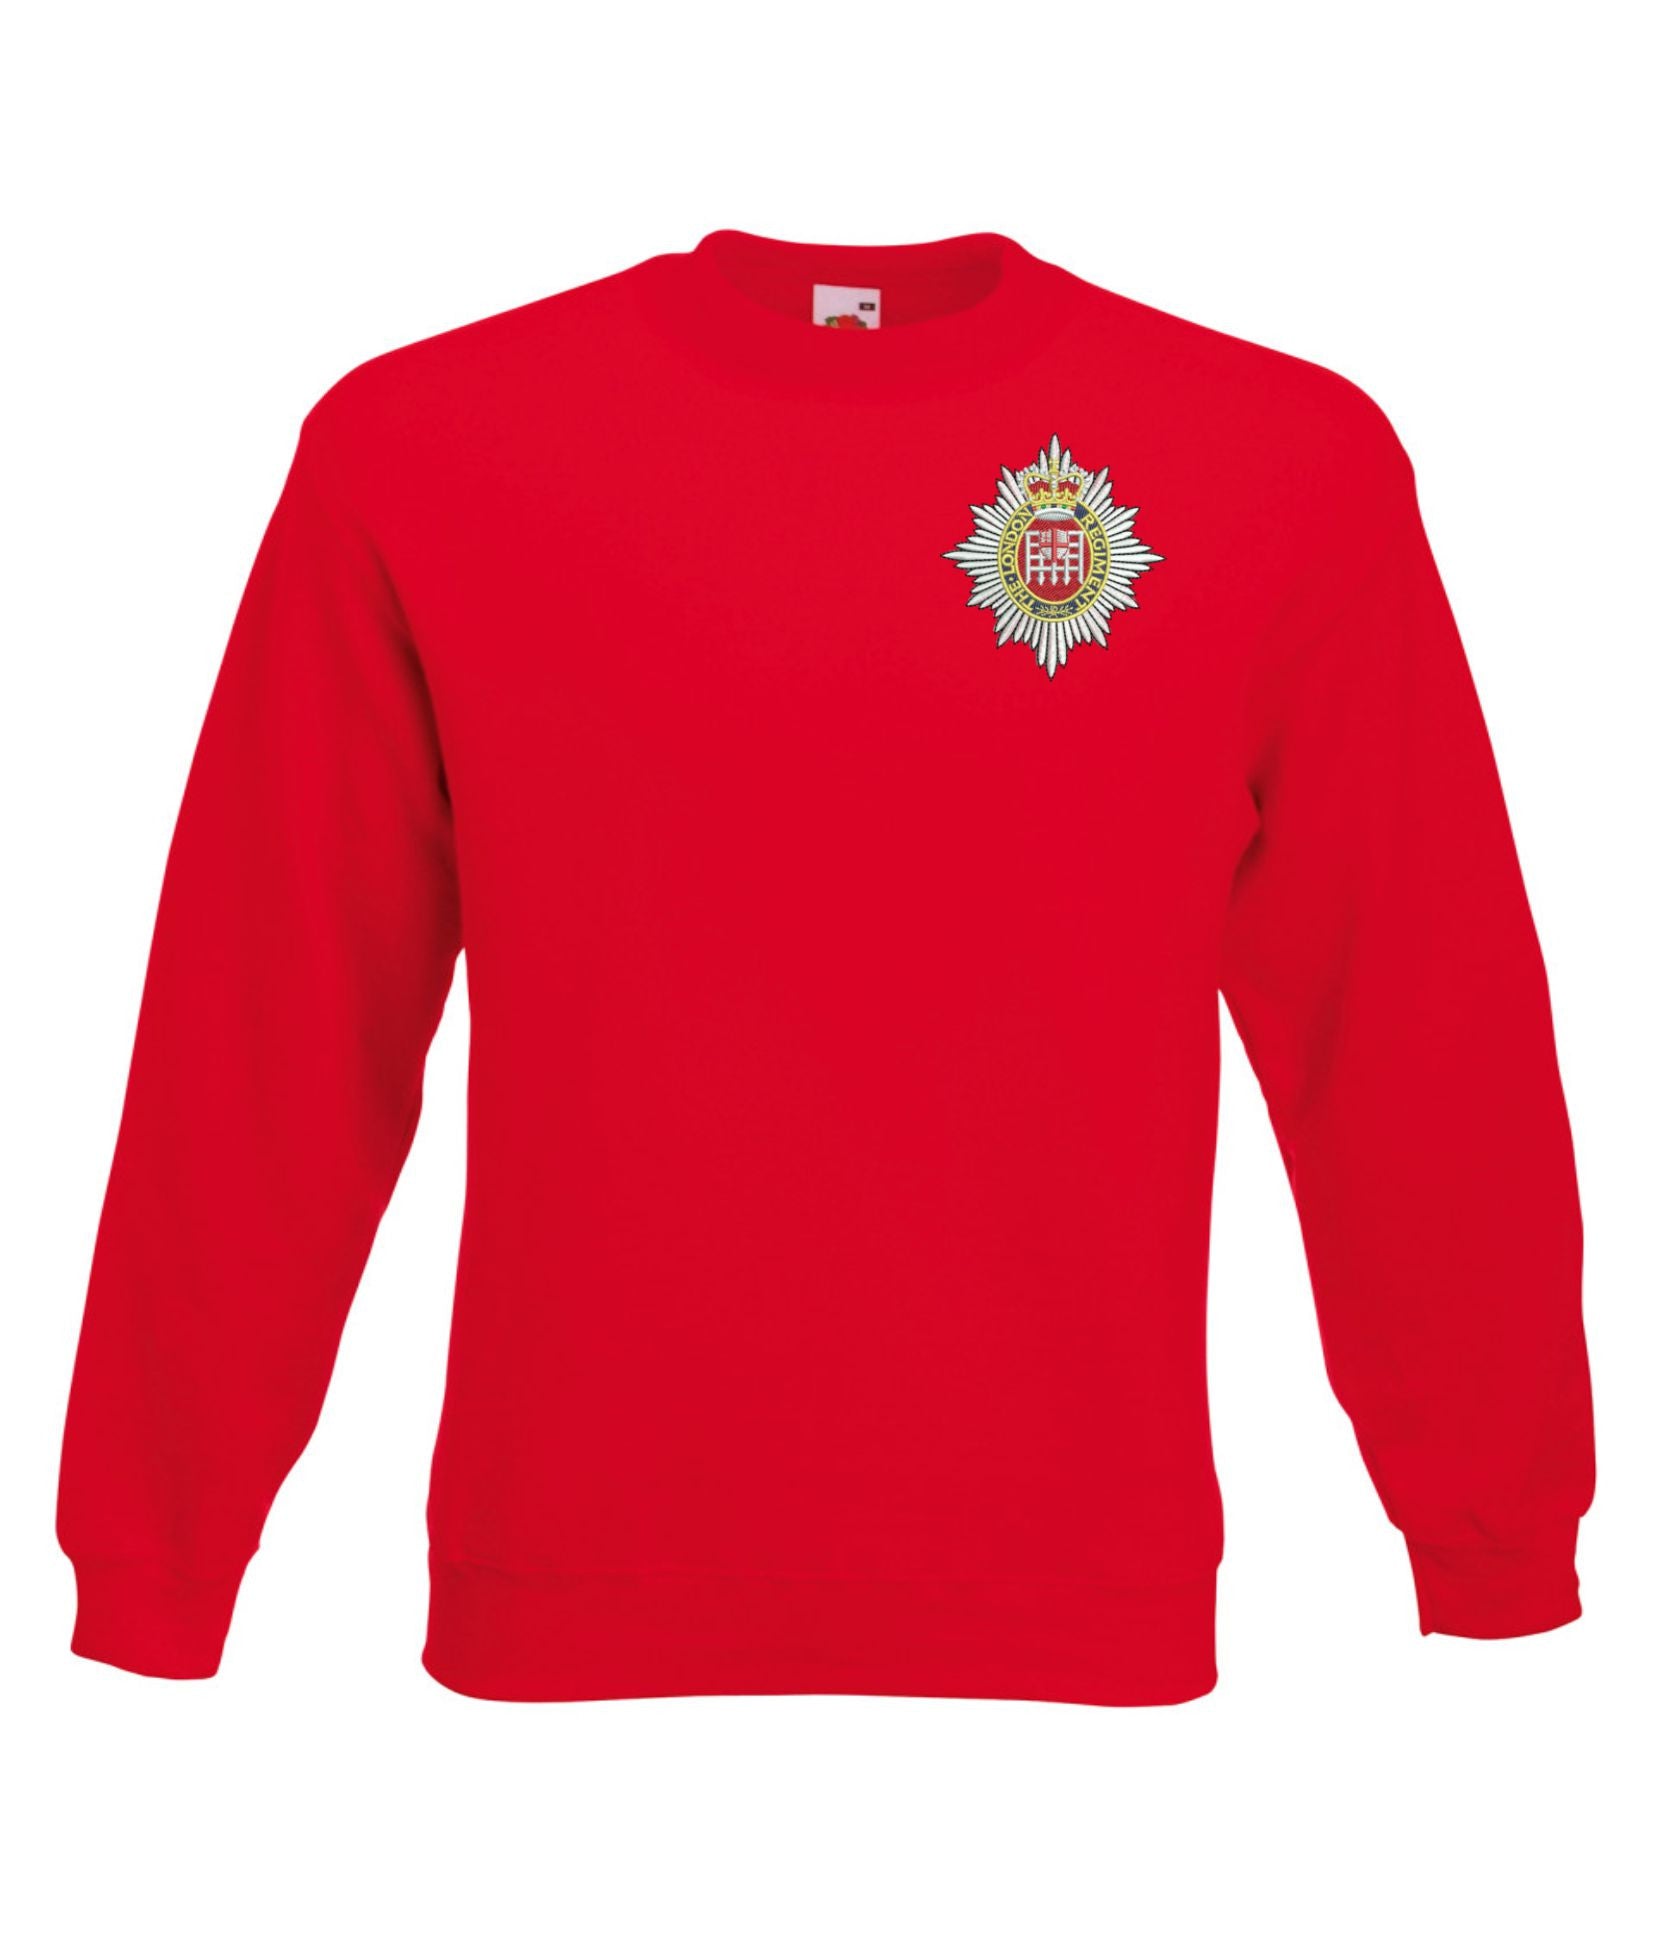 London Regiment Sweatshirts